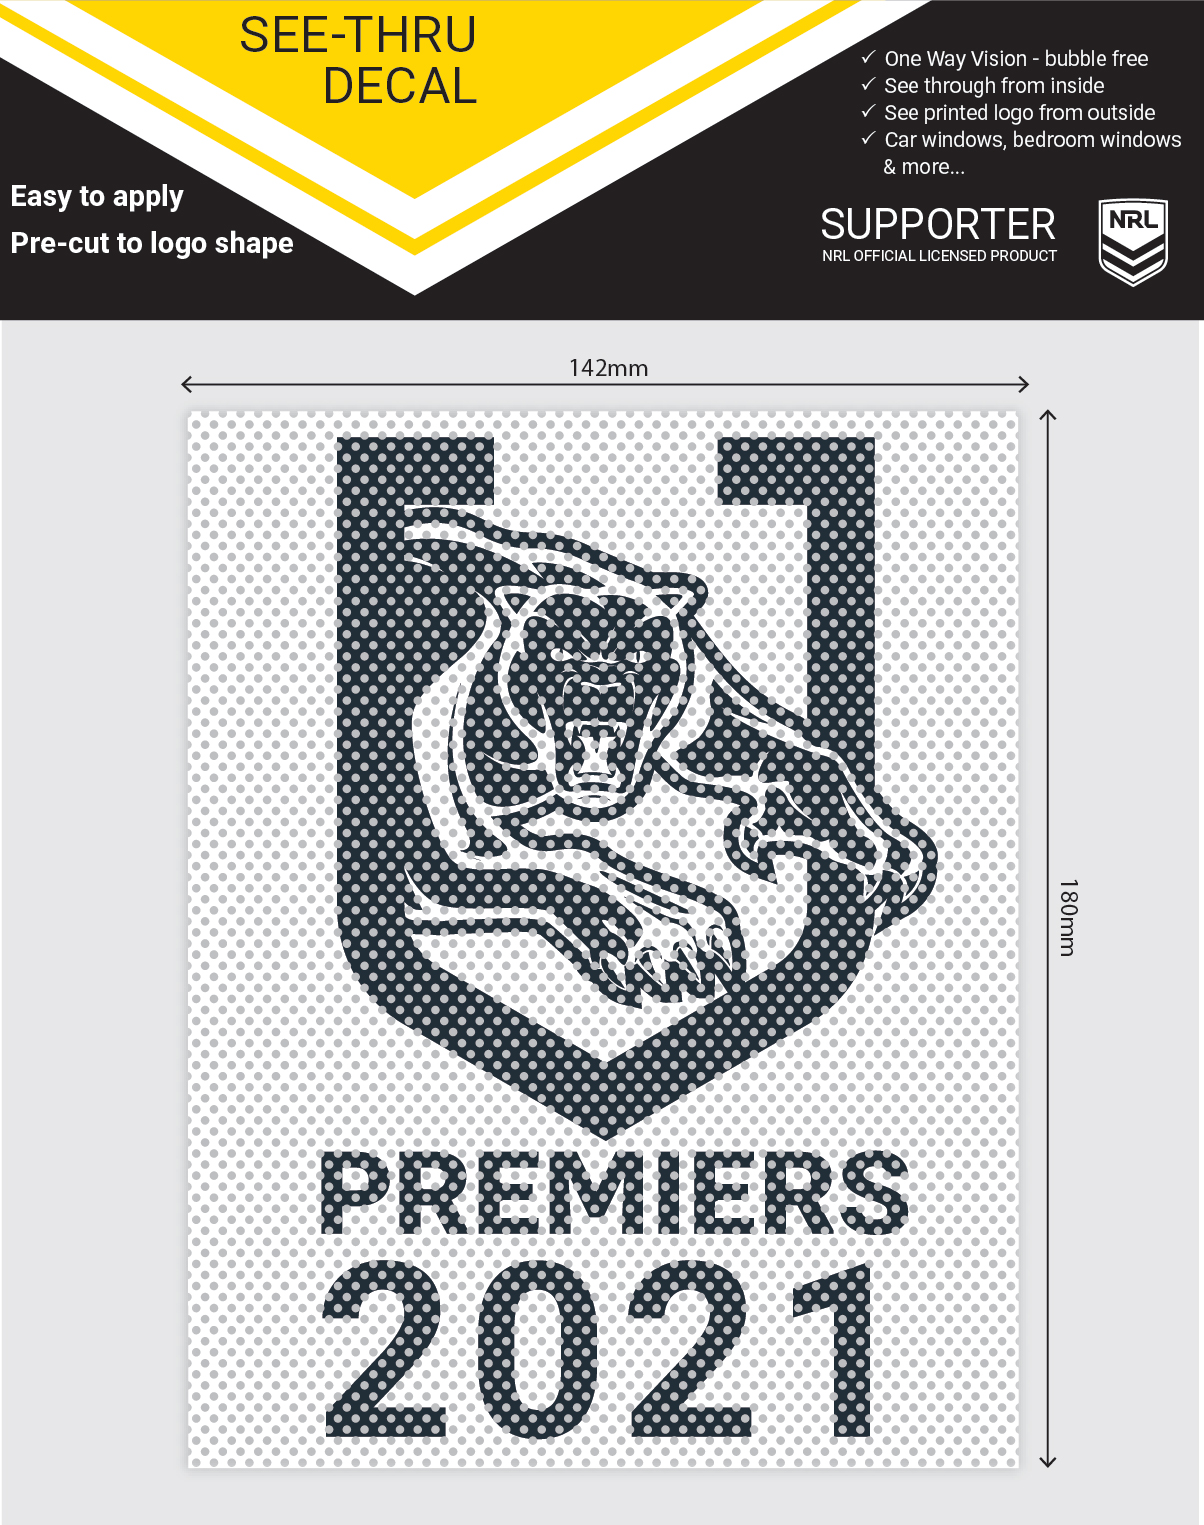 https://guystuff.com.au/penrith-panthers-2021-nrl-premiers-see-thru-window-decal-sticker.html